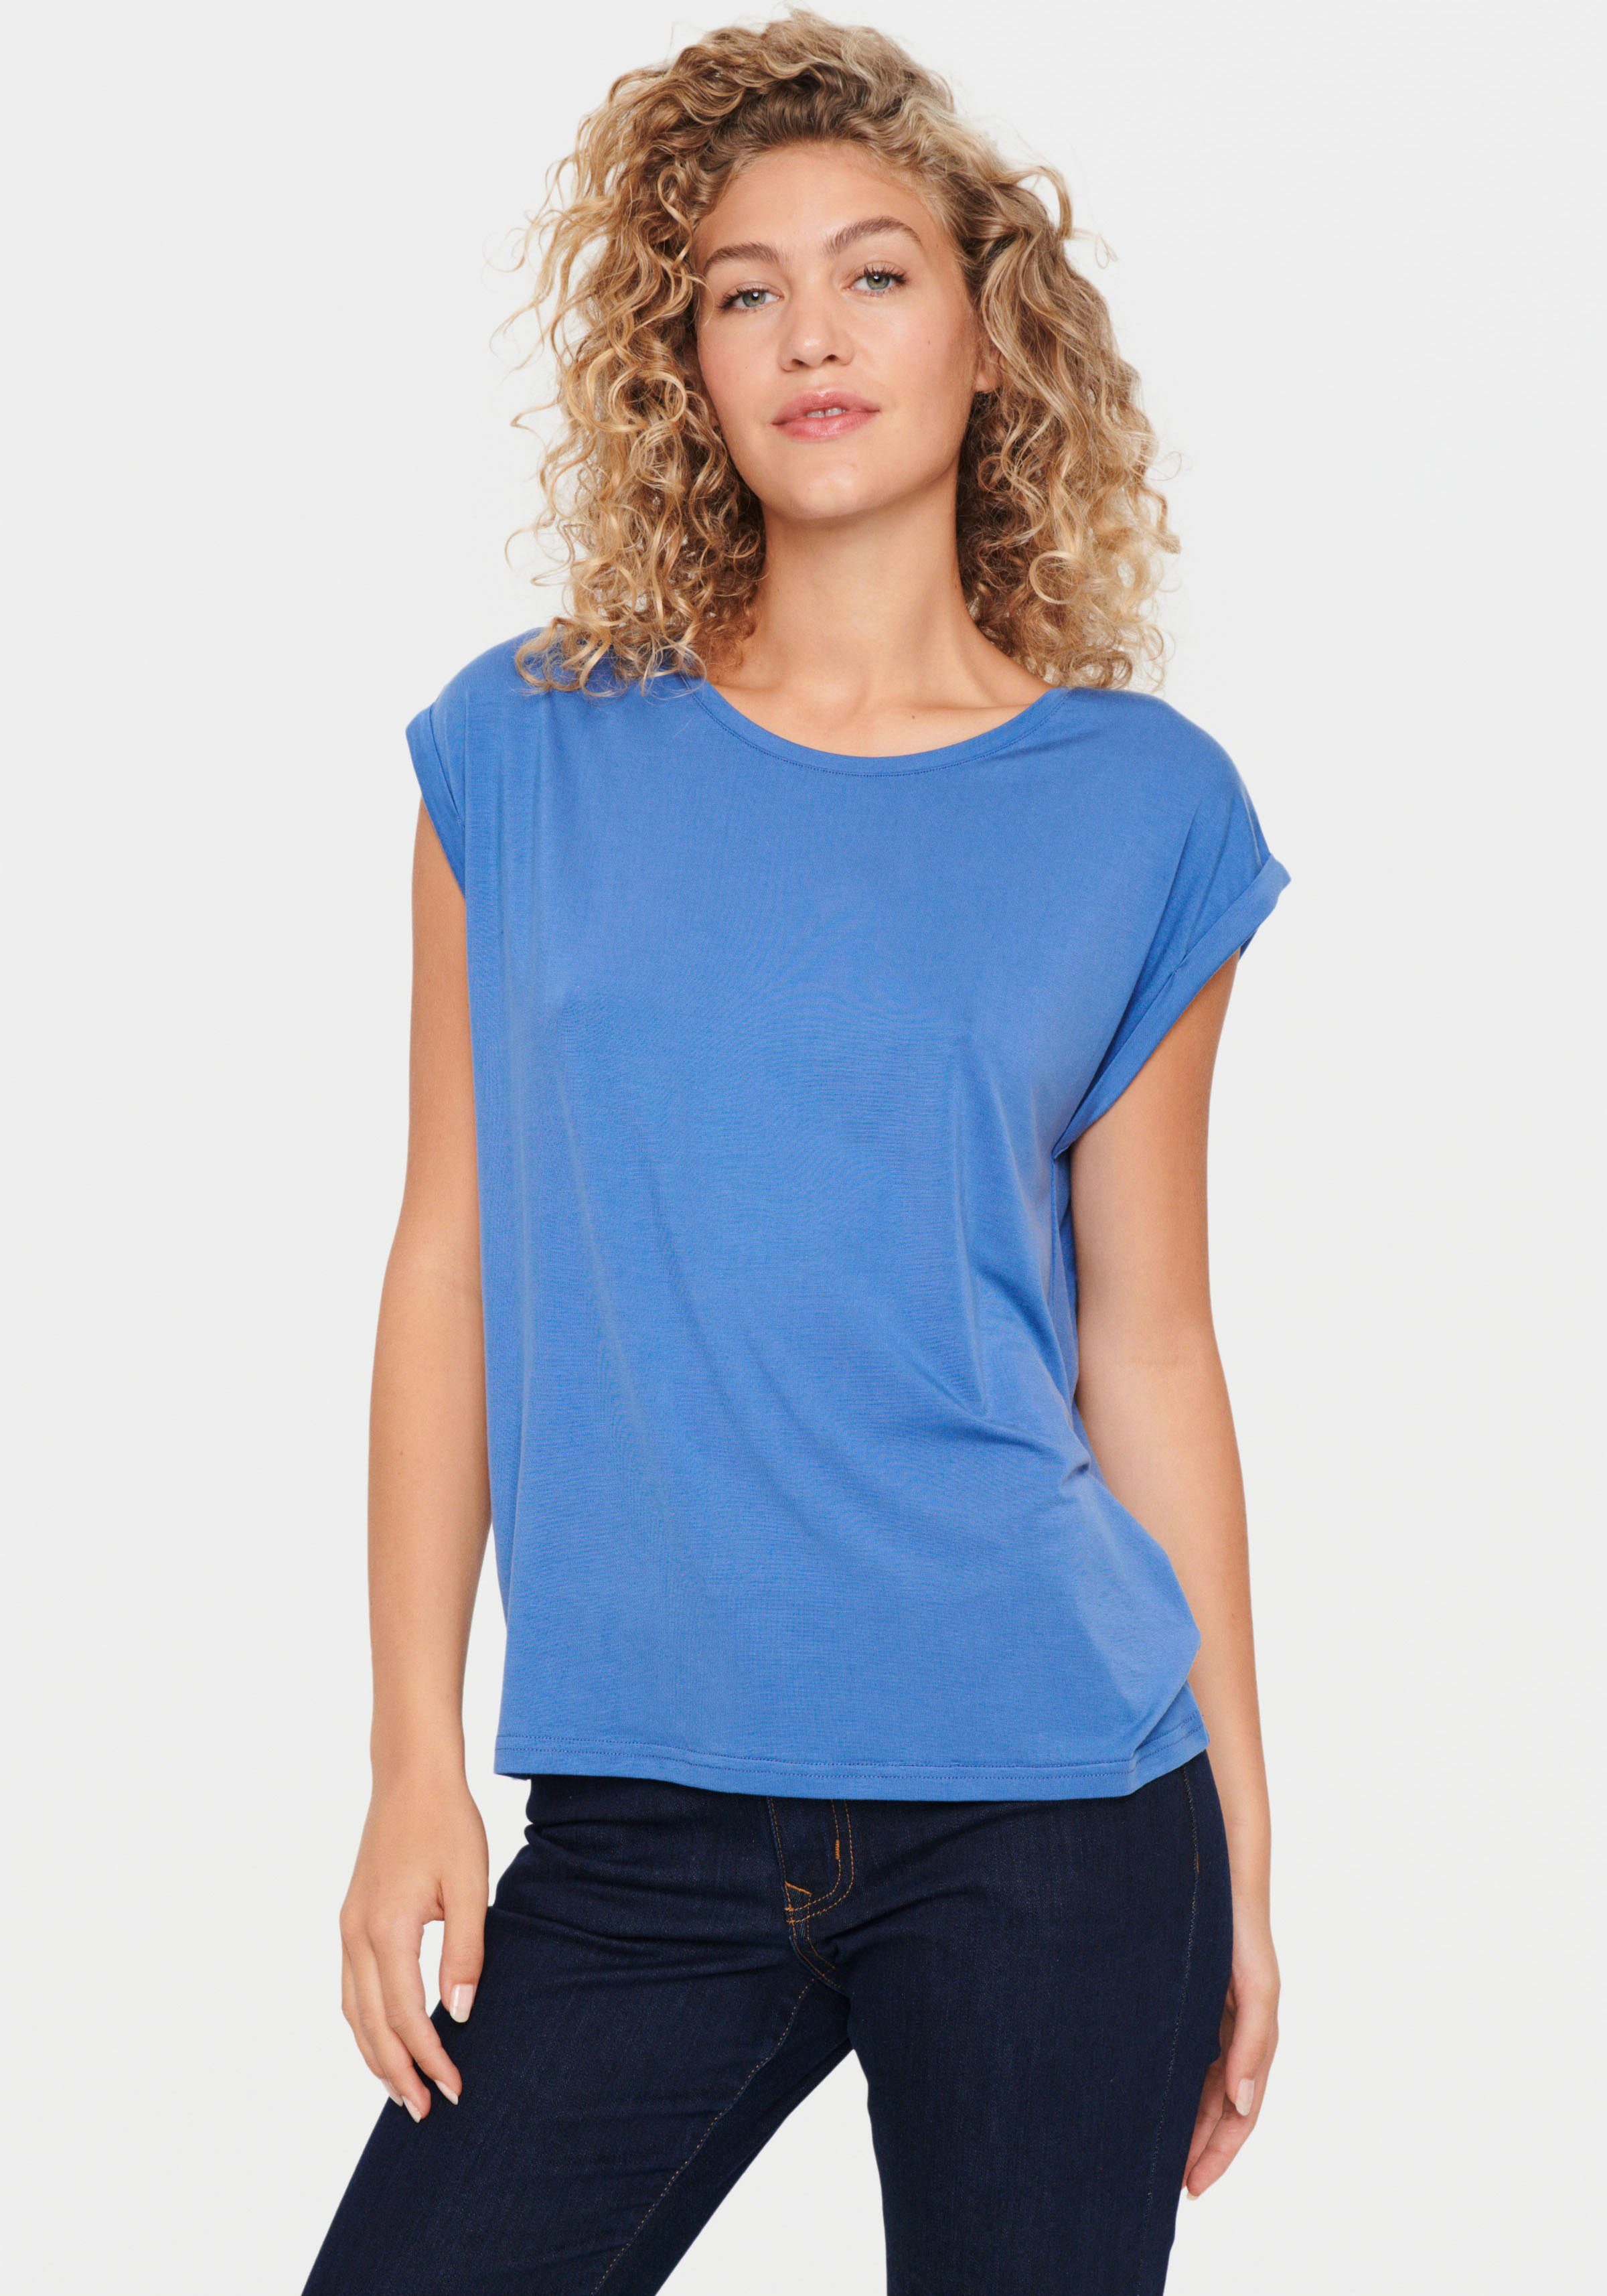 AdeliaSZ Saint Kurzarmshirt Dutch U1520, T-Shirt Tropez Blue